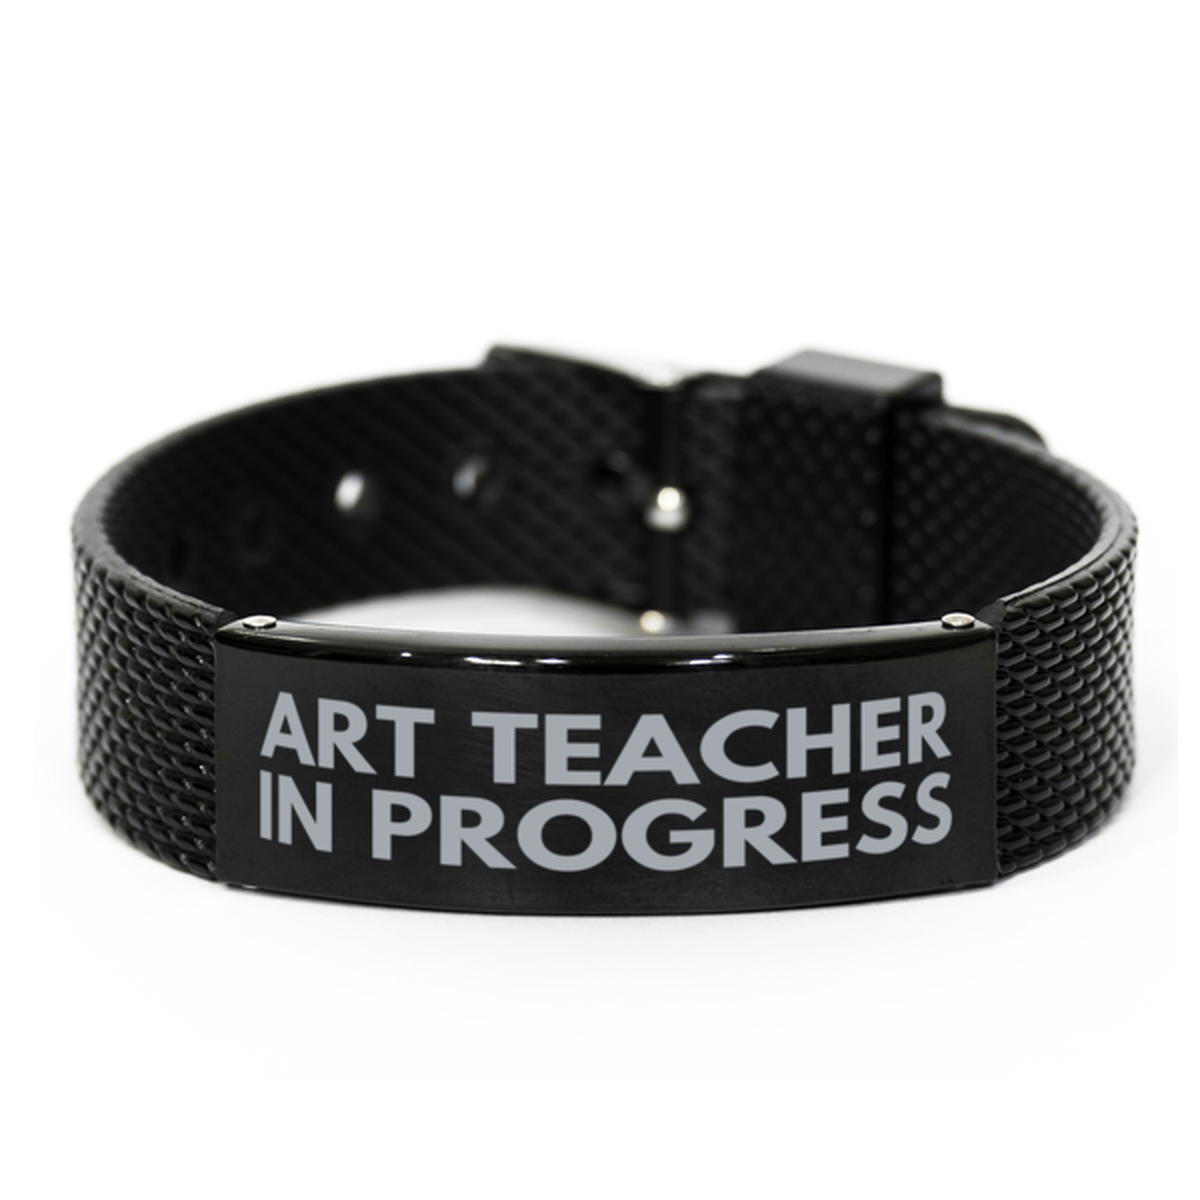 Inspirational Art Teacher Black Shark Mesh Bracelet, Art Teacher In Progress, Best Graduation Gifts for Students